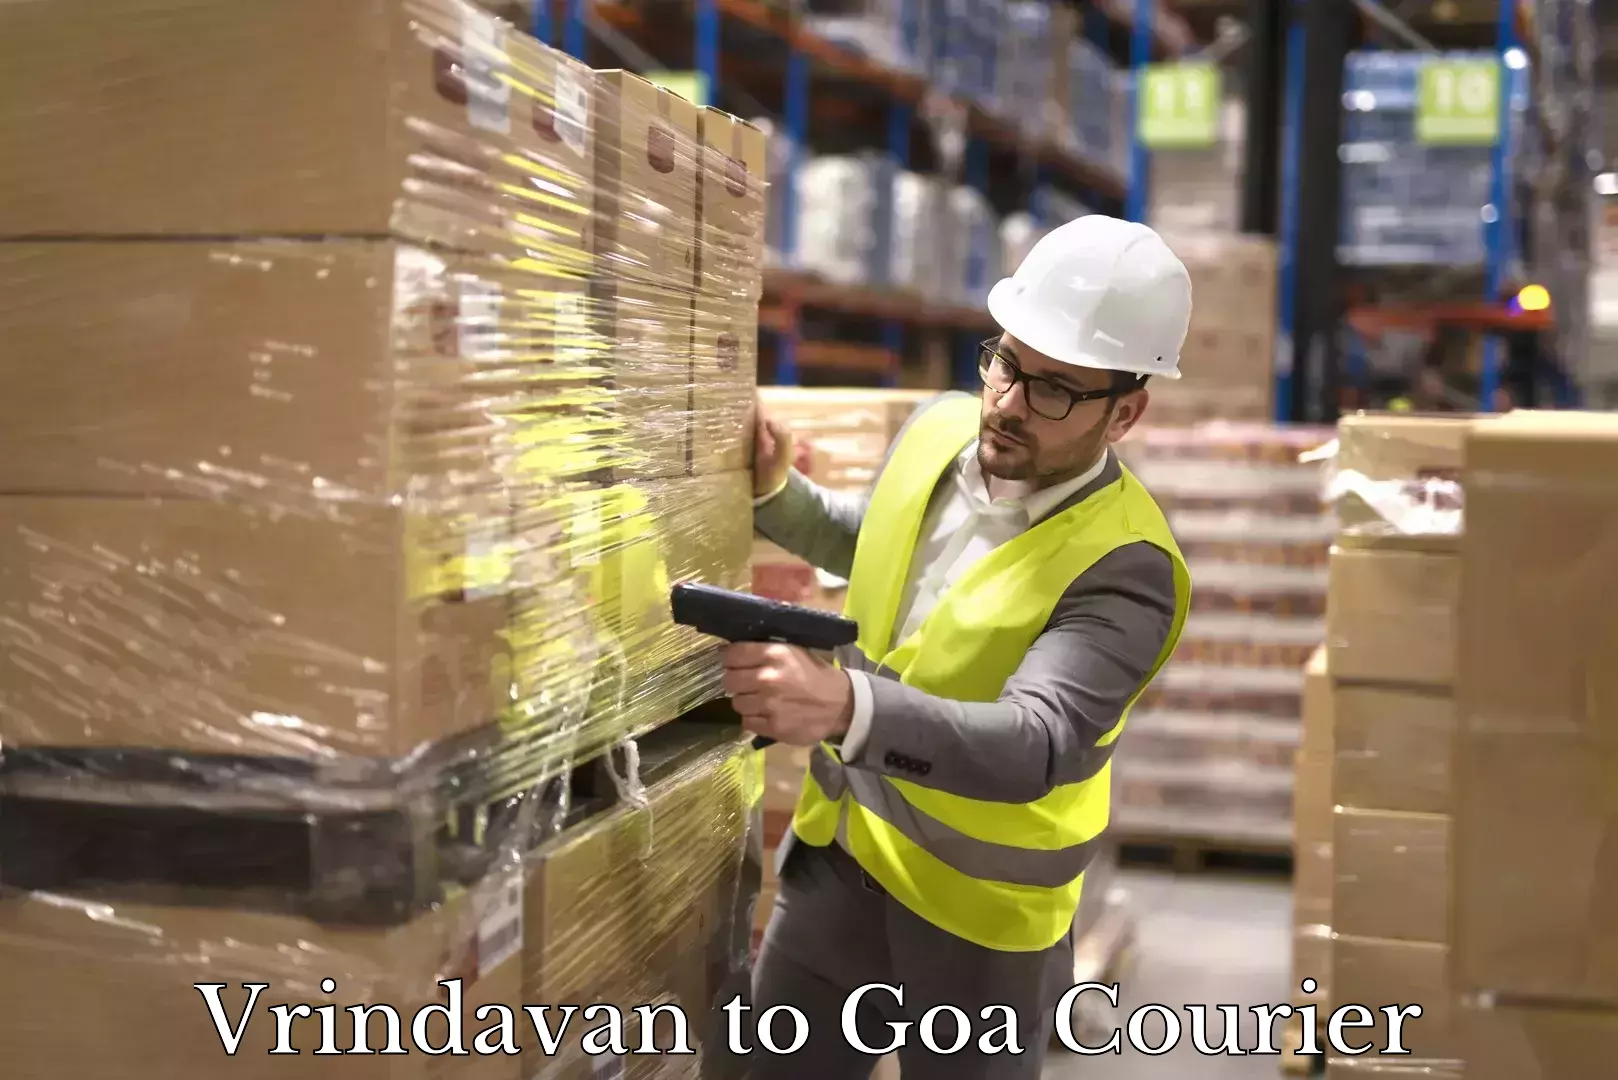 Global logistics network Vrindavan to Goa